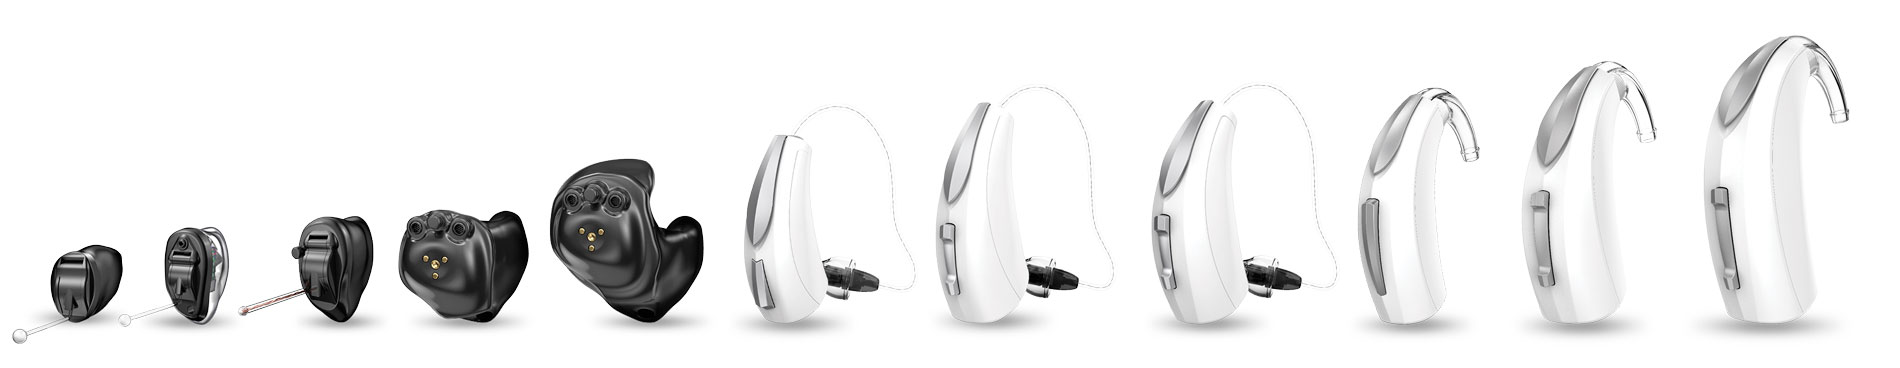 you-hear-starkey-evolve-ai-hearing-aid-full-line-technology-accessibility-improvement-language-interpretation